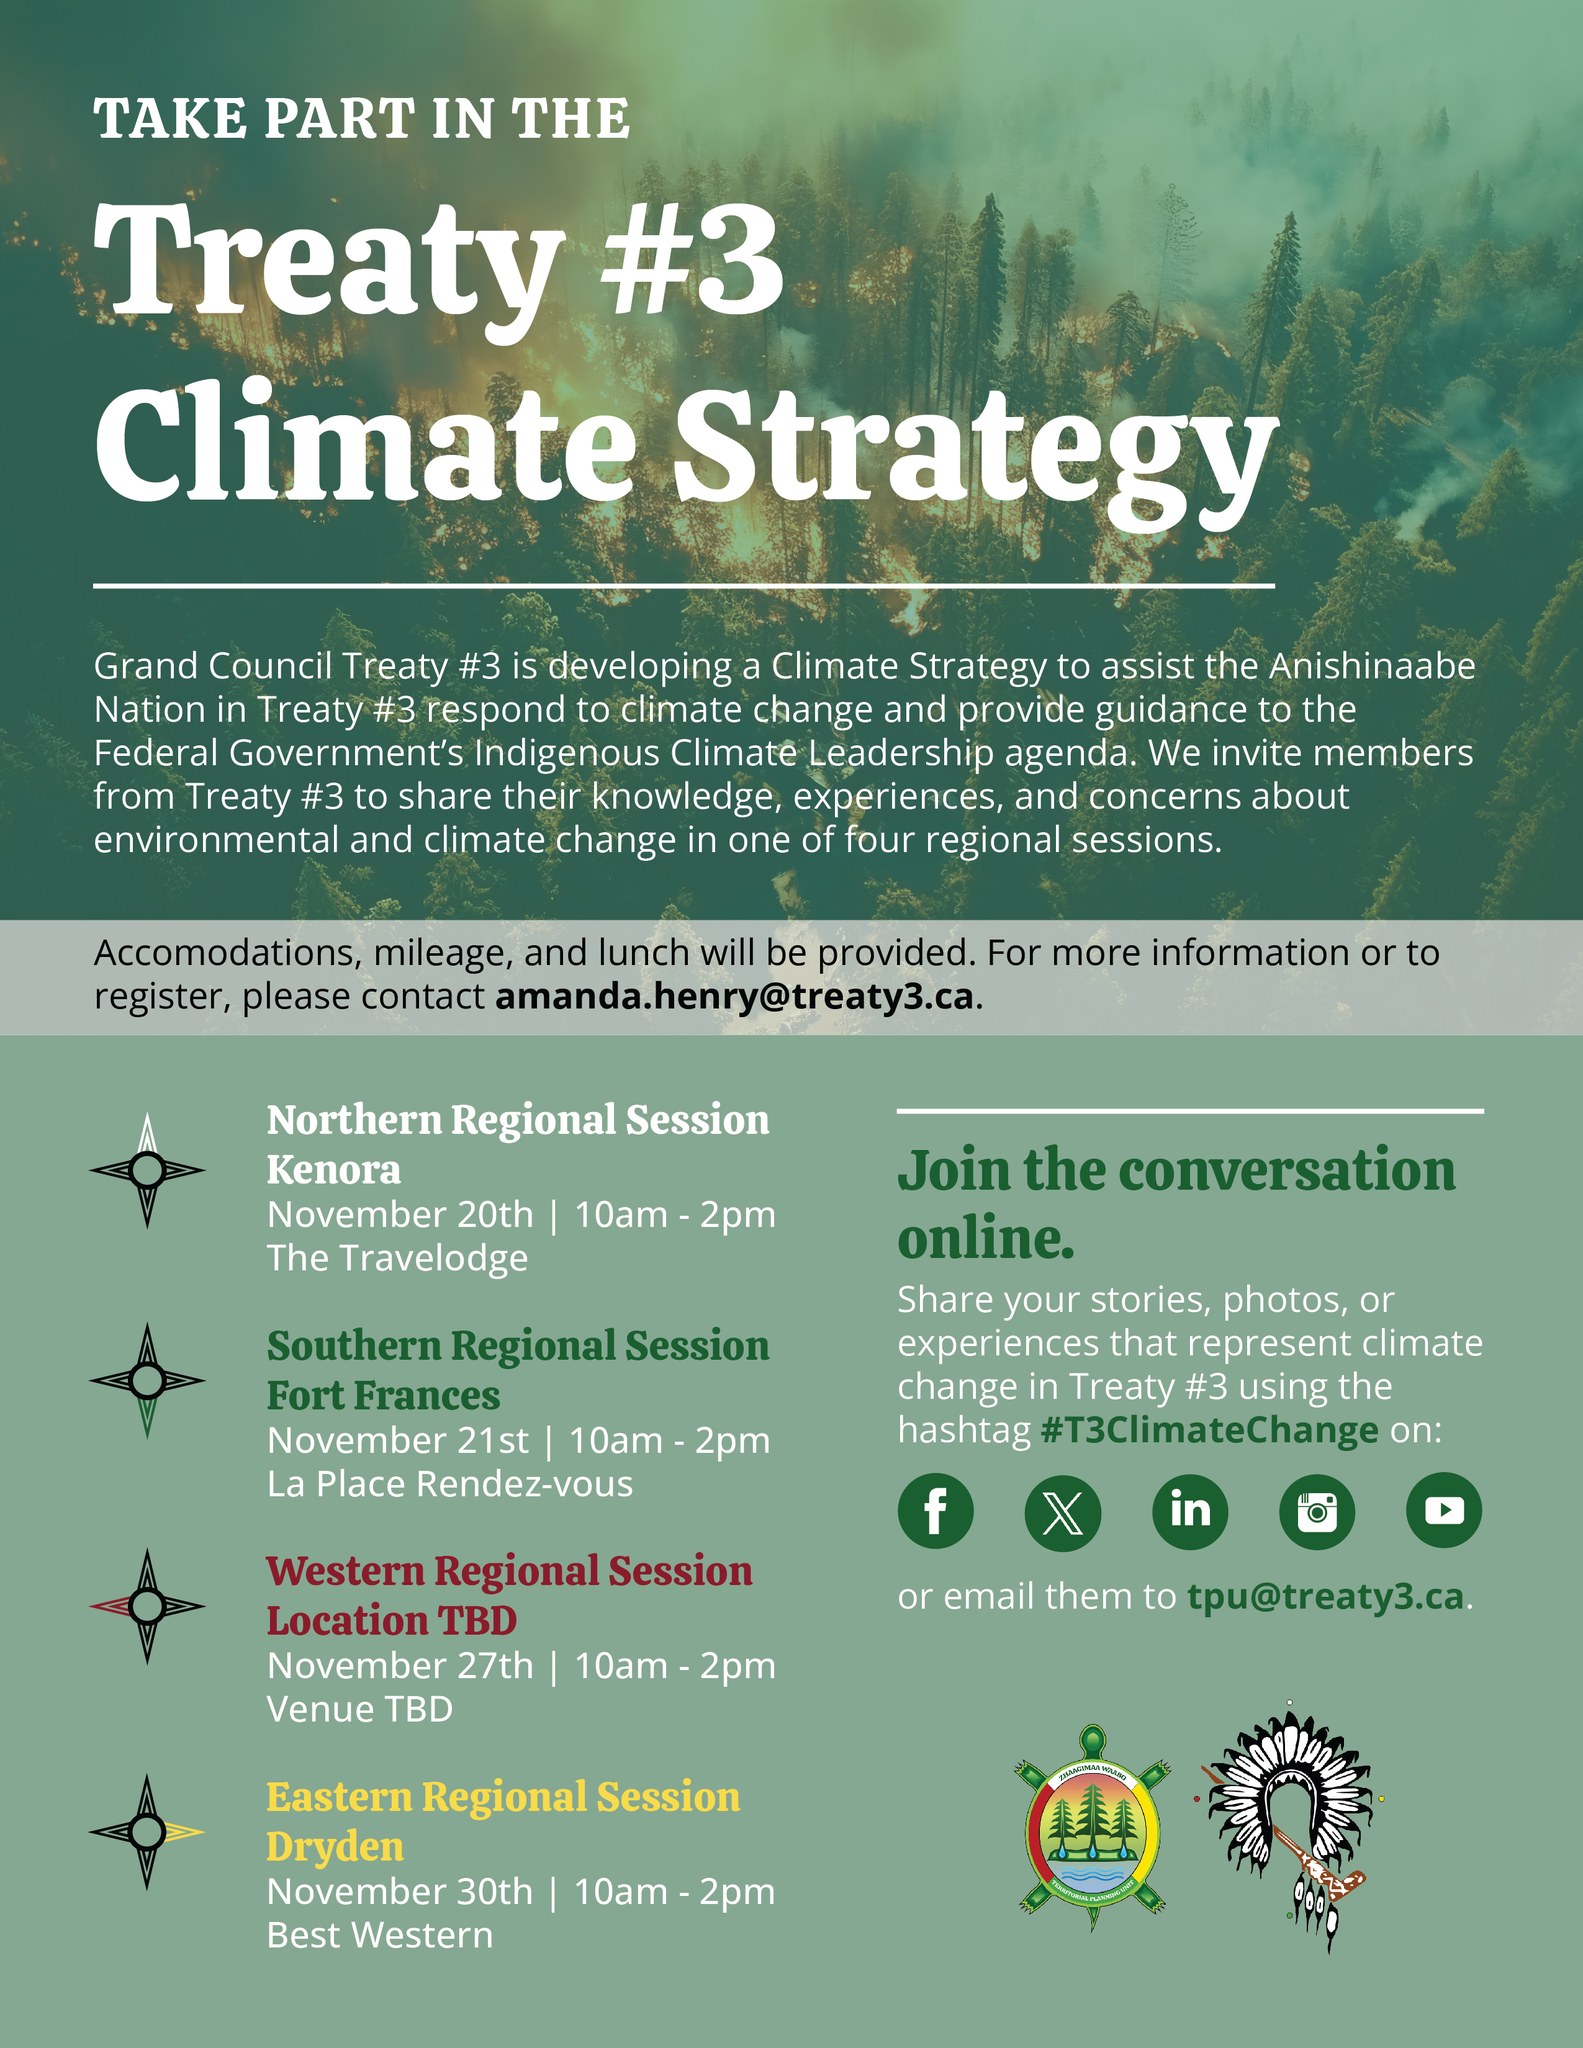 Treaty #3 Climate Strategy Session (Kenora)